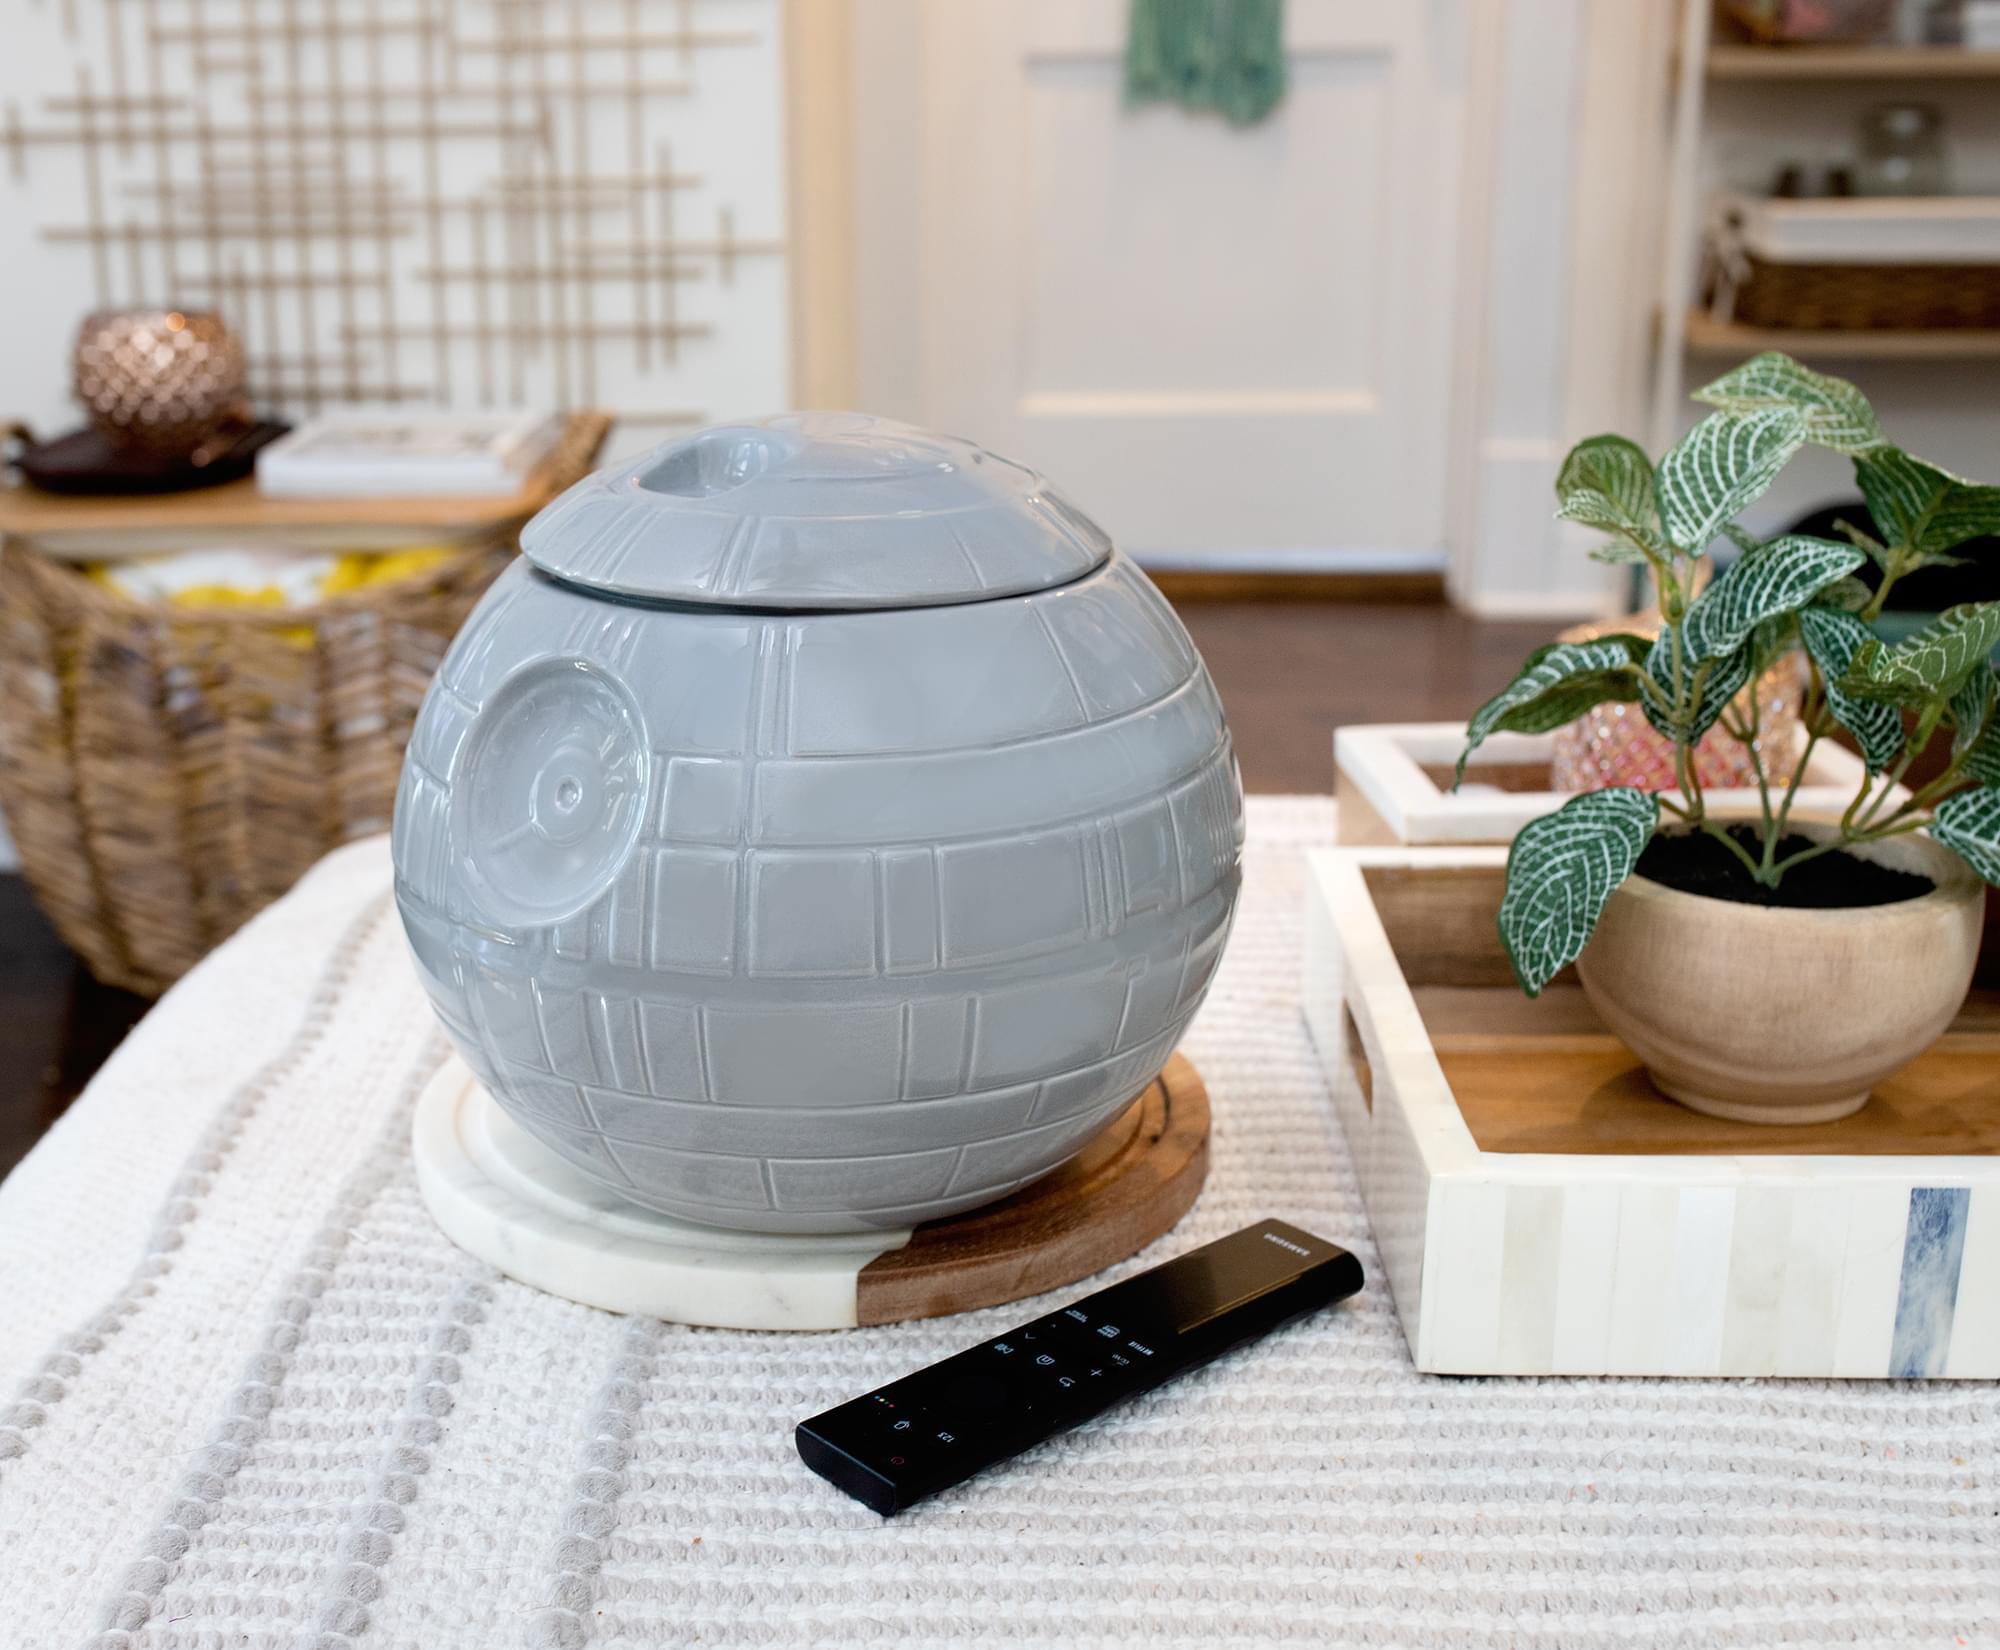 Ceramic Star Wars Death Star Salt and Pepper Shakers